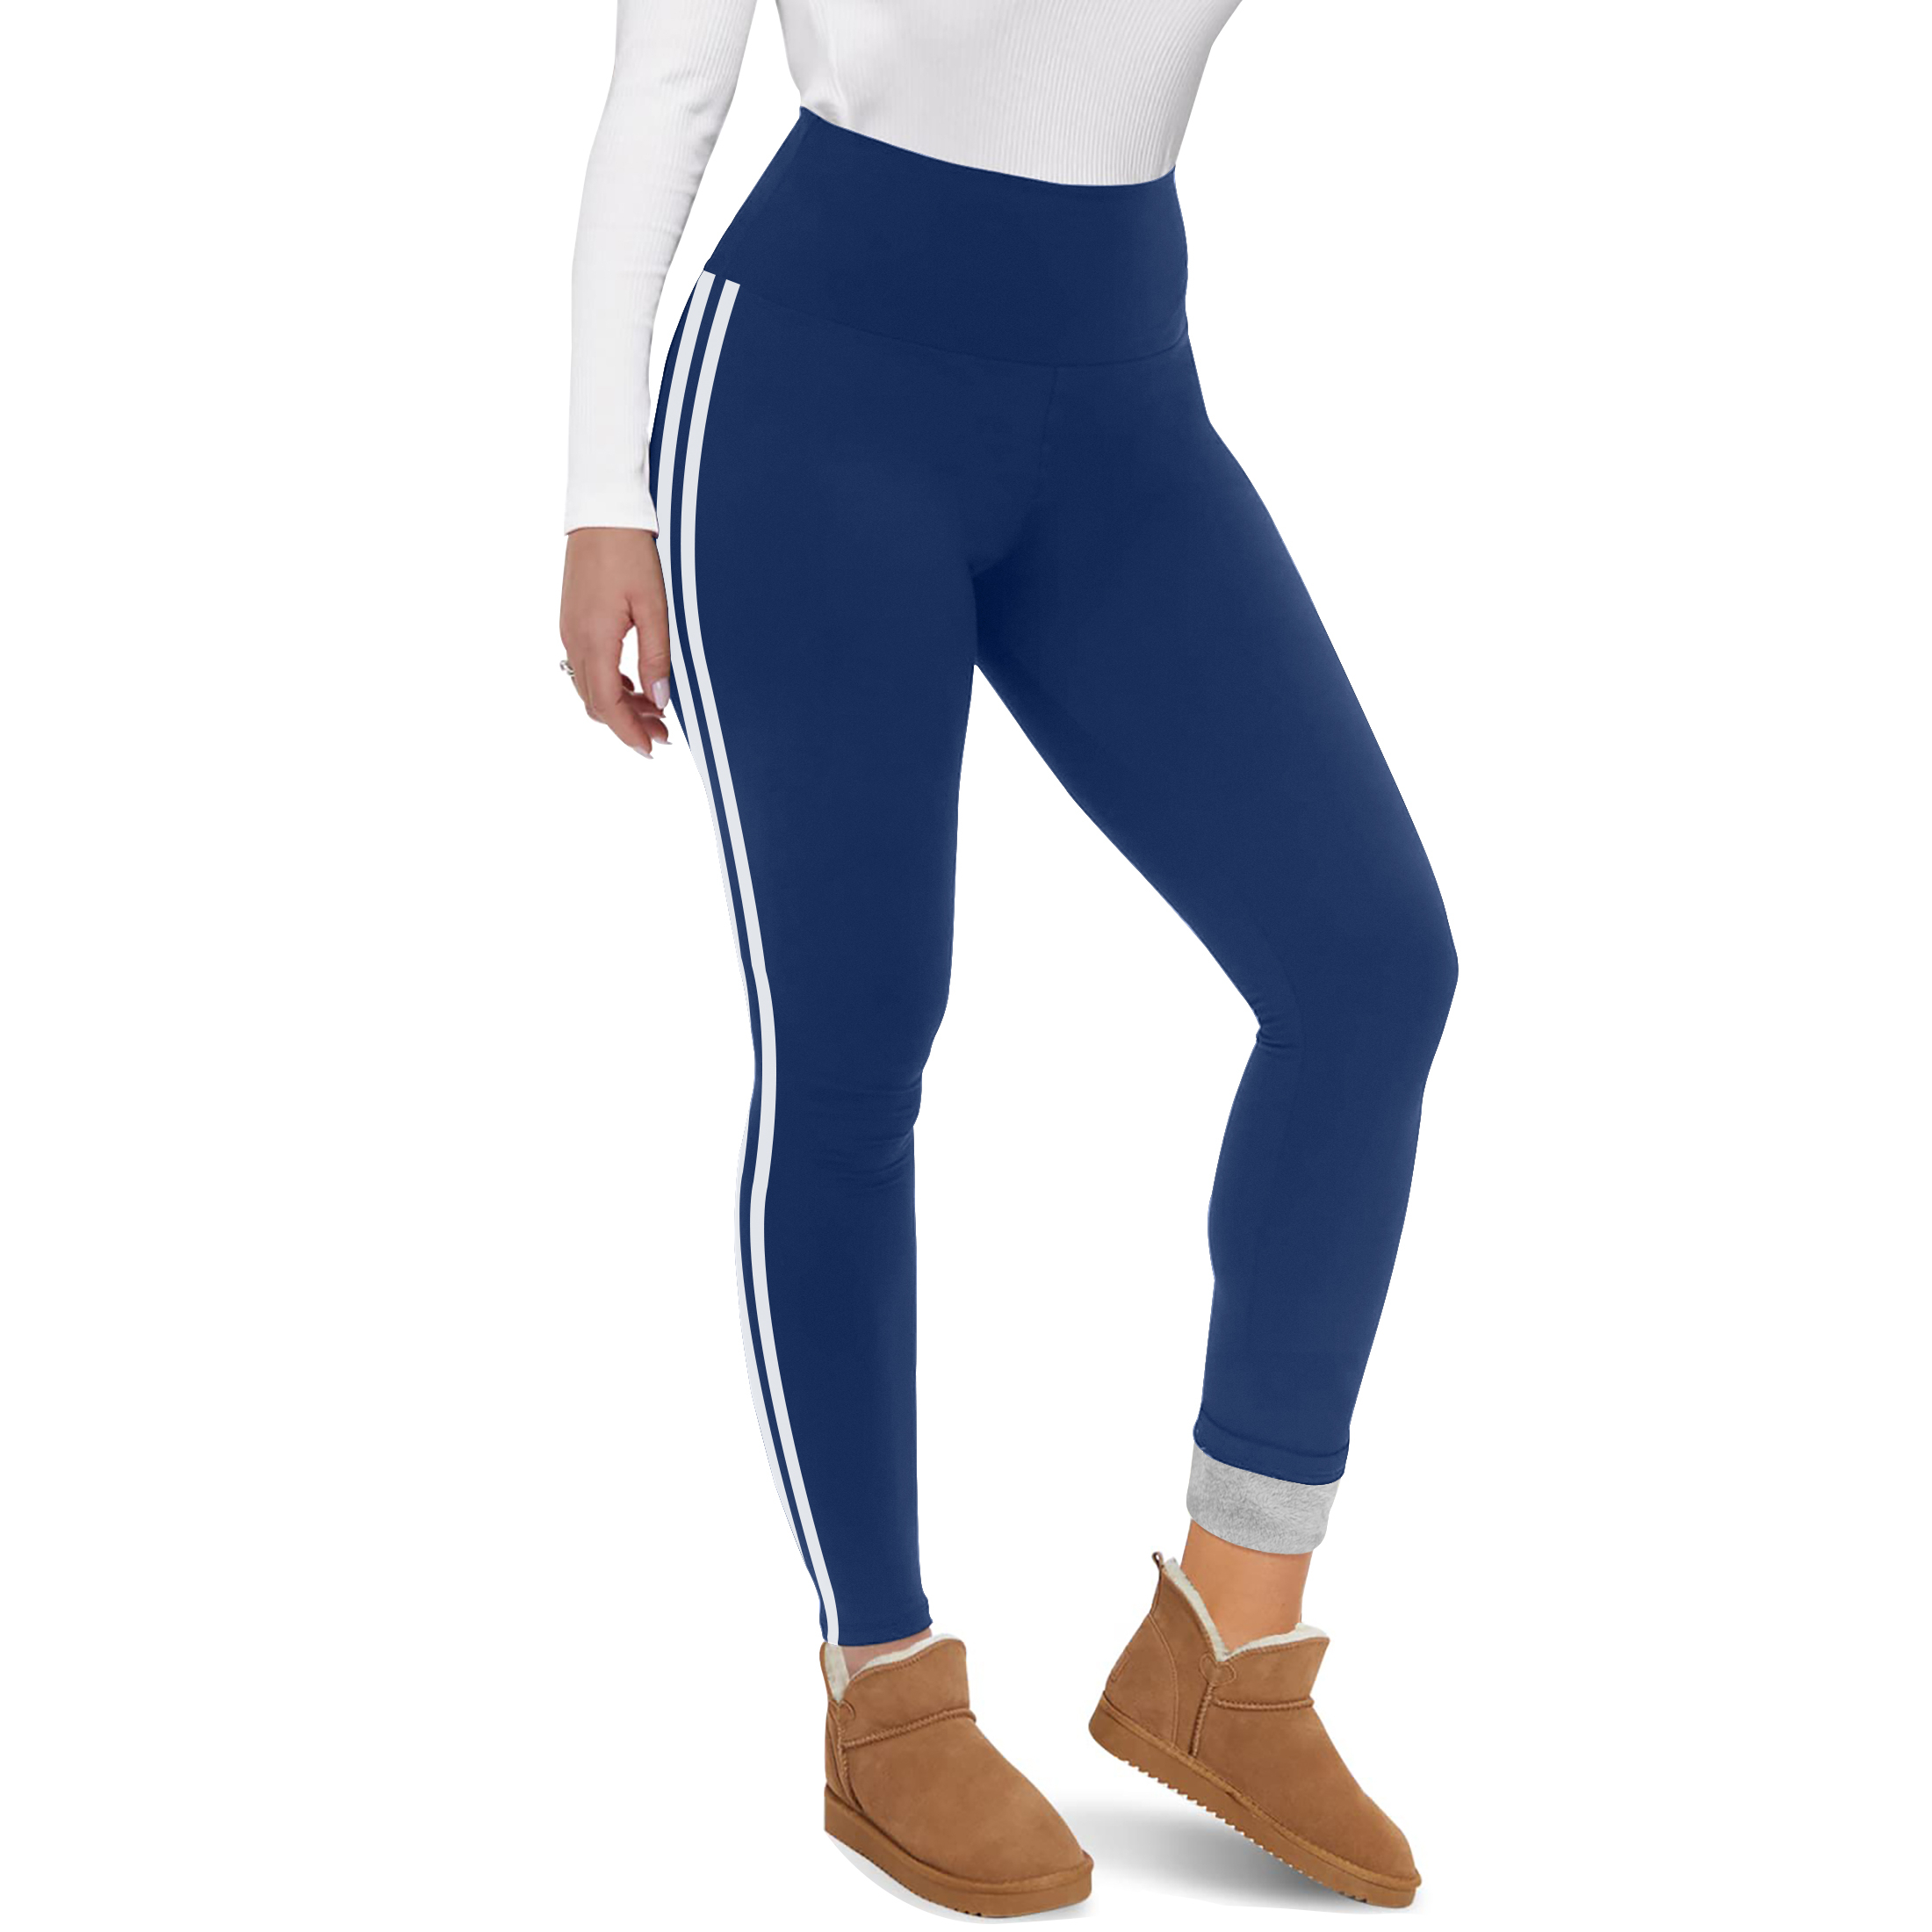 4-Pack: Women's Ultra Soft Fur Lined Yoga Pants High Waisted Leggings - Small/Medium